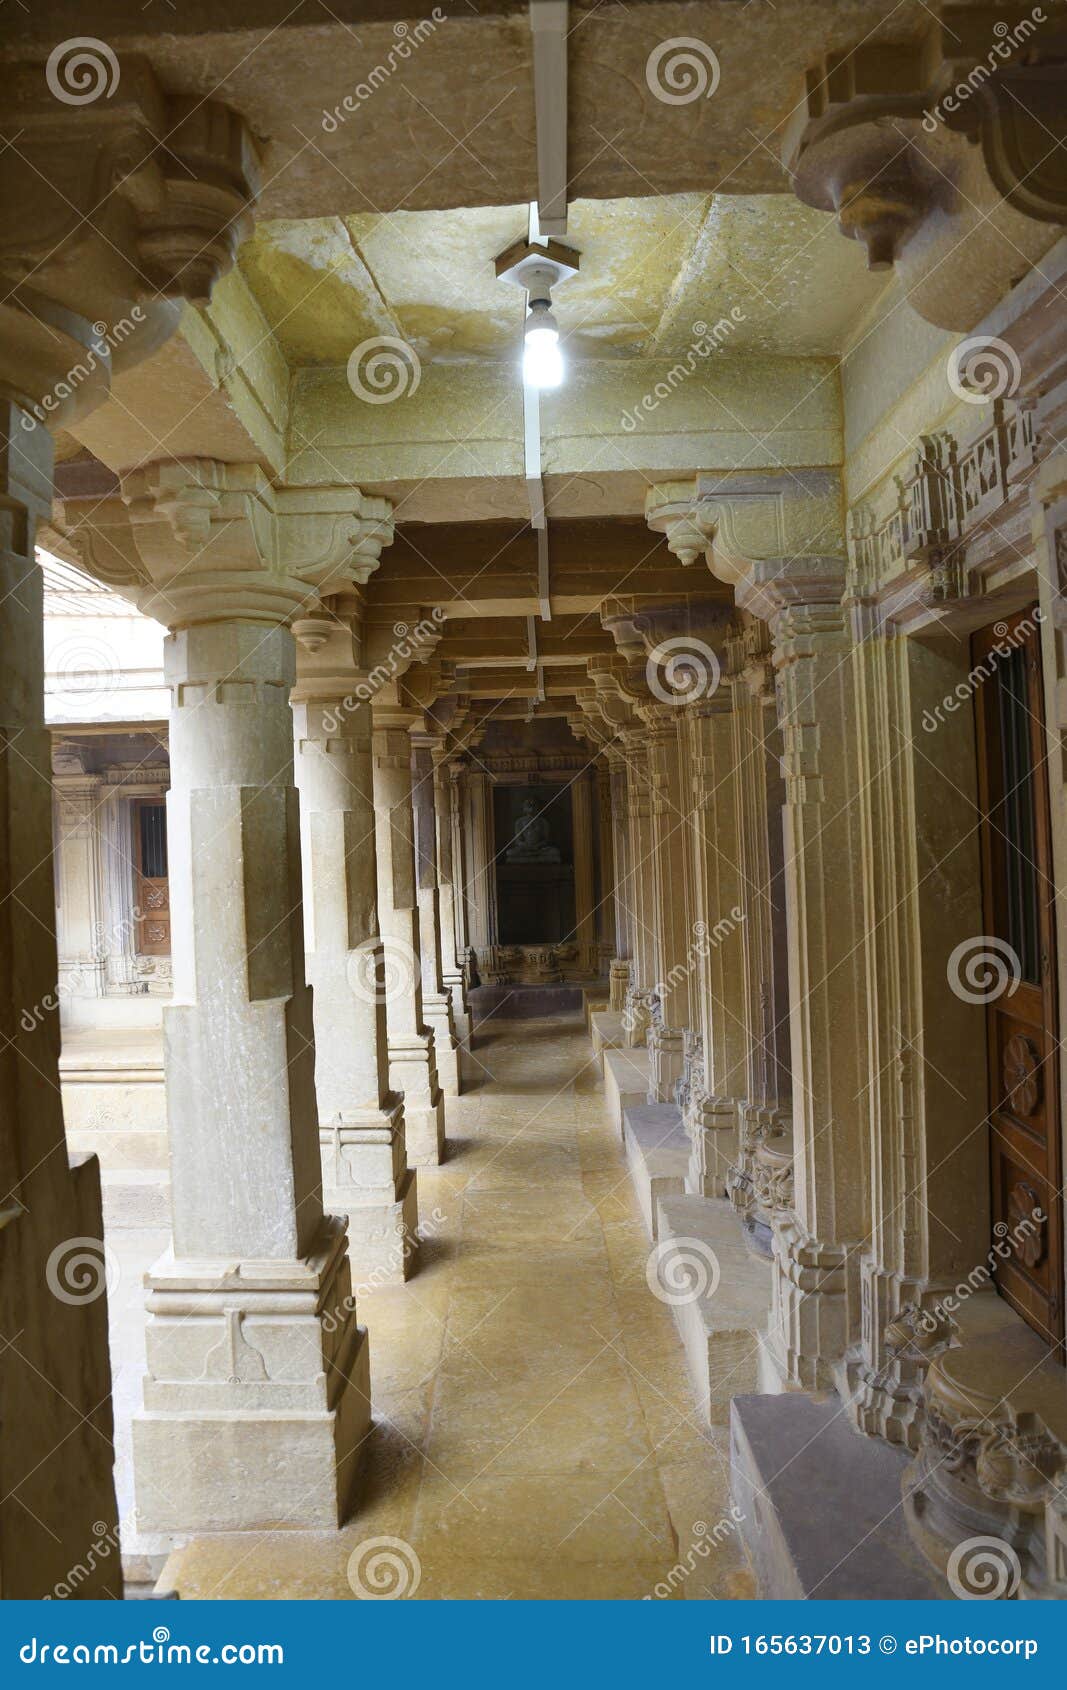 shri mahaveer jain temple, circumambulation passage around sanctum sanctorum, inside golden fort, jaisalmer, rajasthan, india